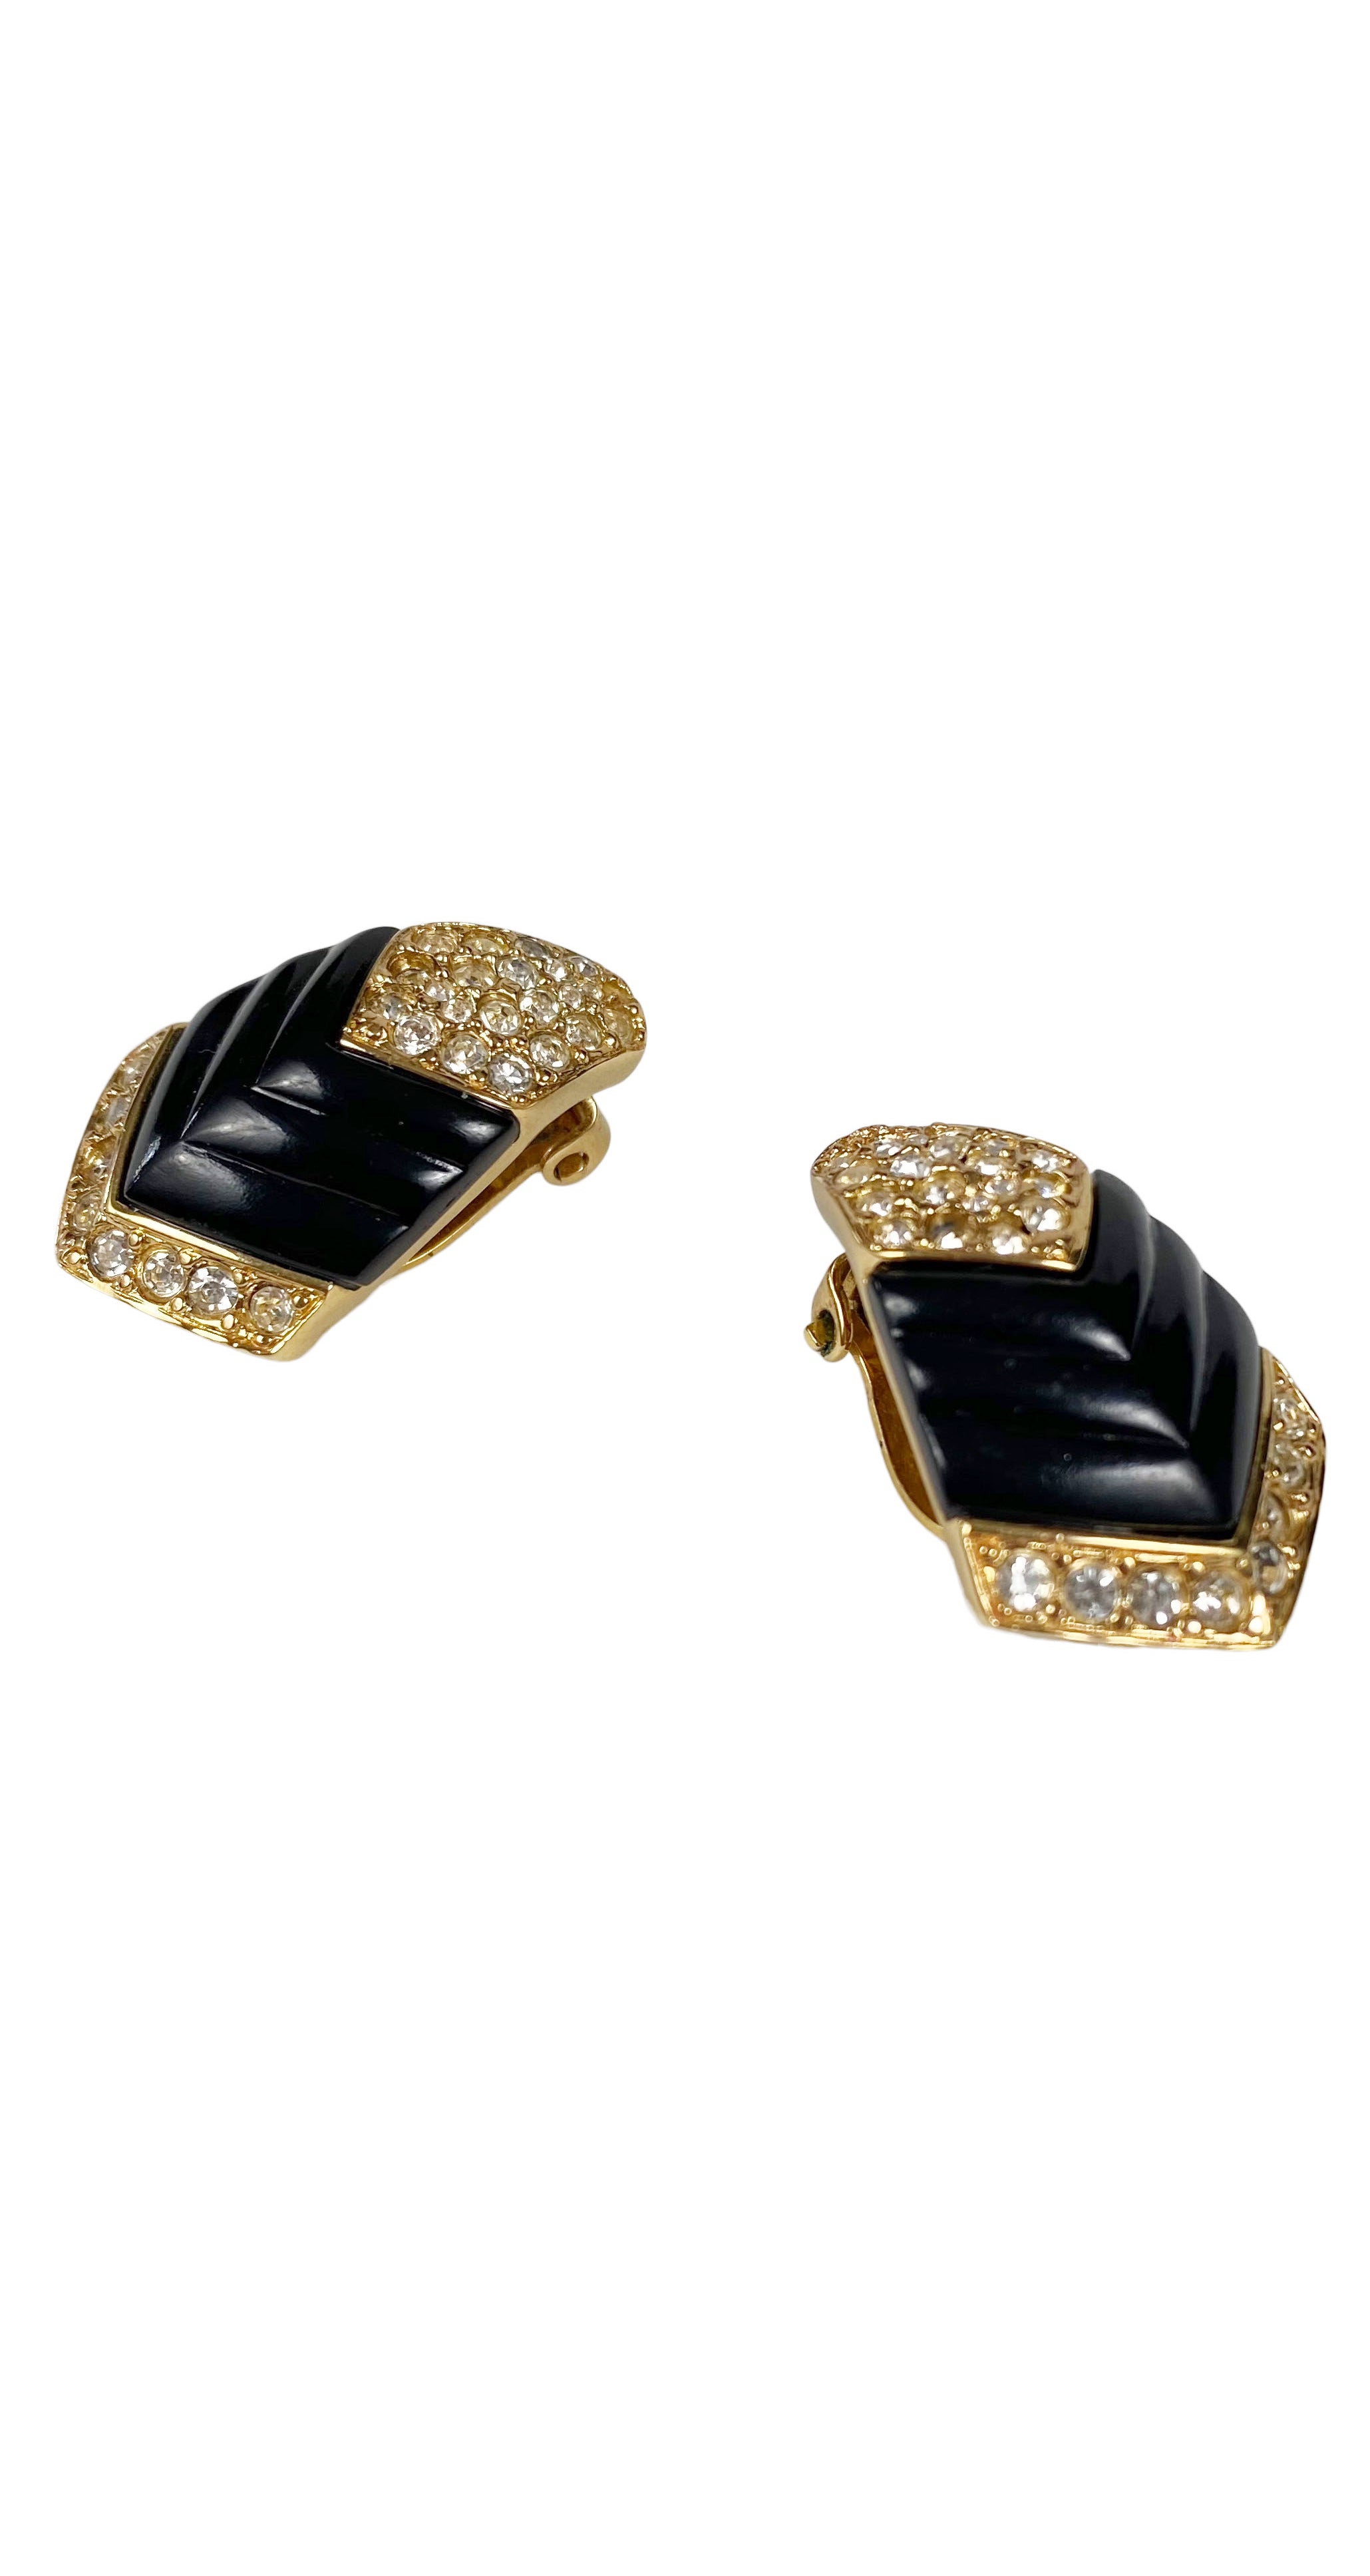 1980s Rhinestone Black & Gold Clip-On Earrings